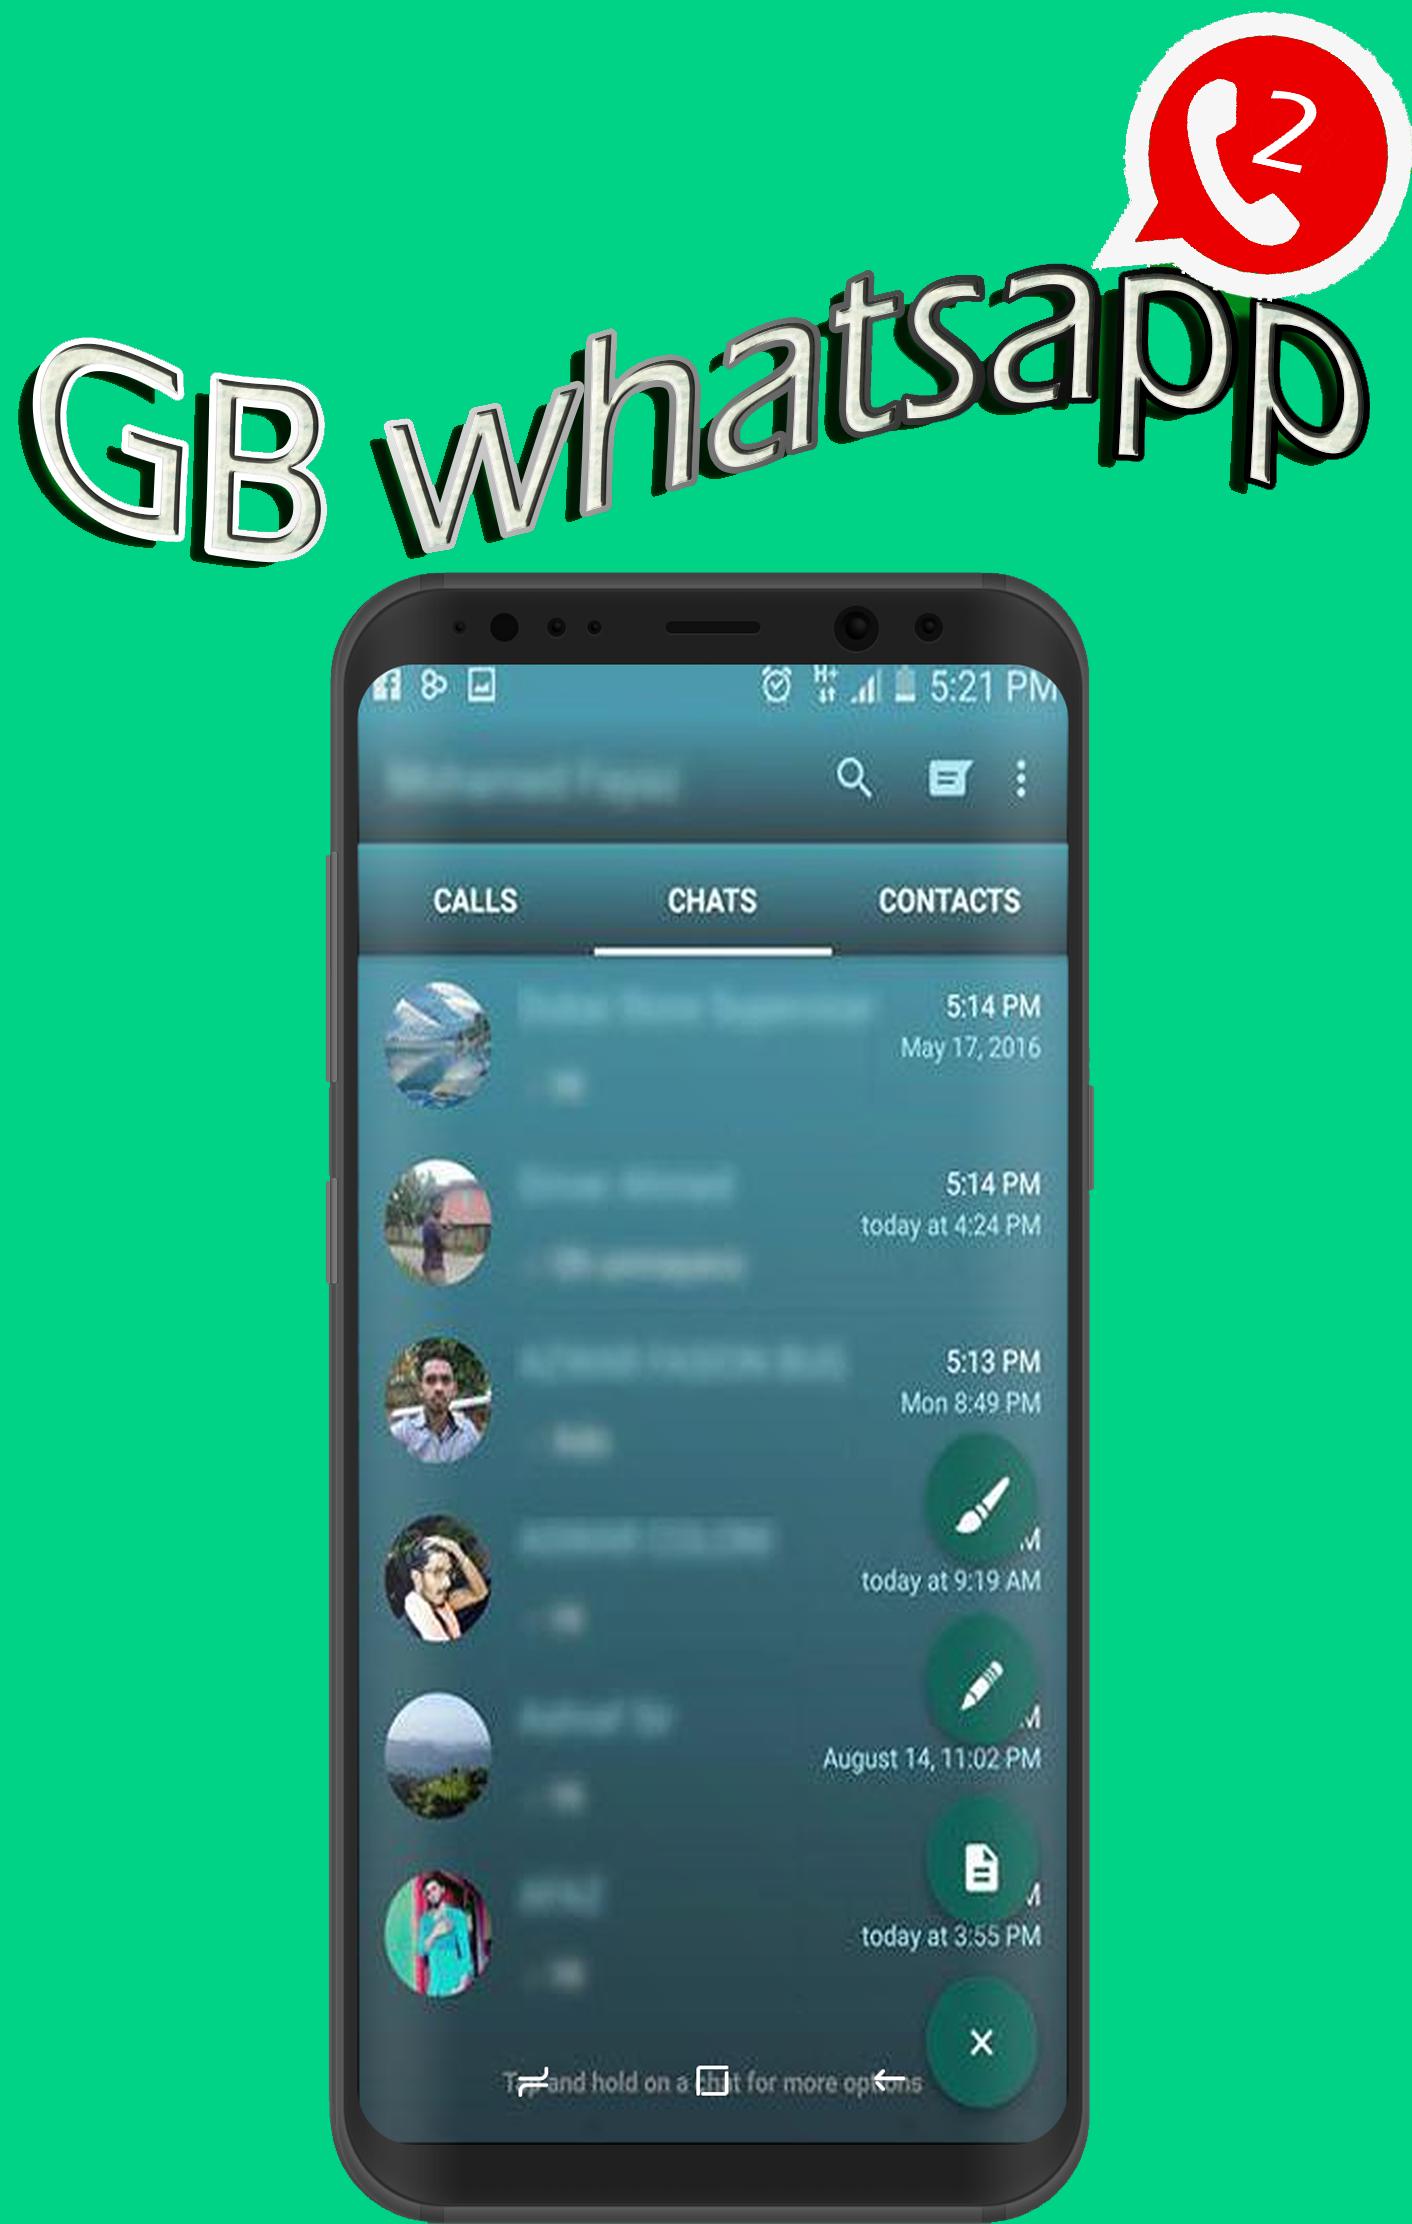 Whatsapp plus 17.70. GB WHATSAPP Plus. Синий ватсап плюс. GB WHATSAPP Plus 2020. WHATSAPP последняя версия.